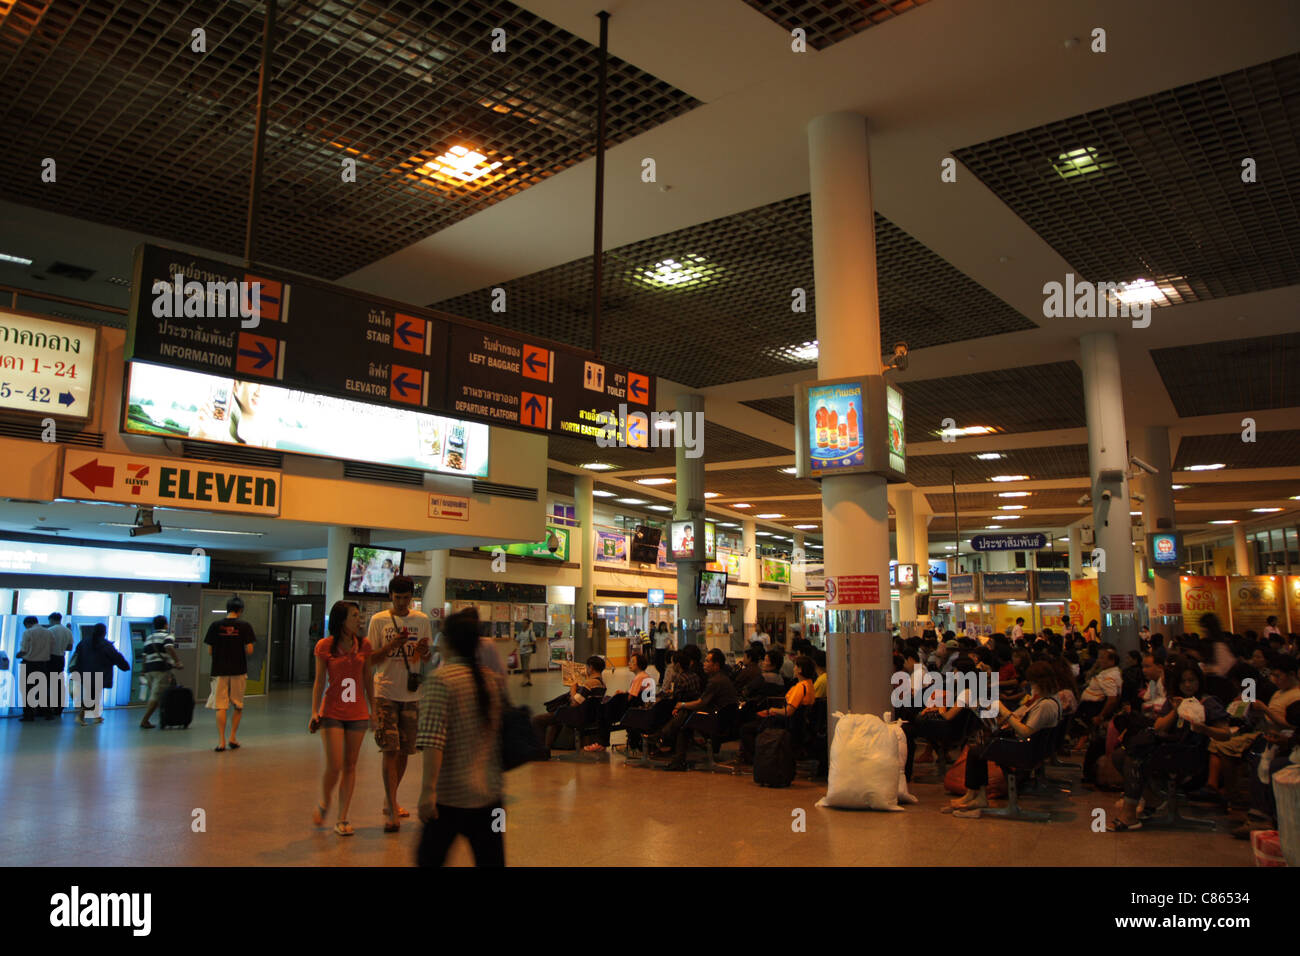 Northern Bus terminal, Bangkok, Thailand Stockfoto